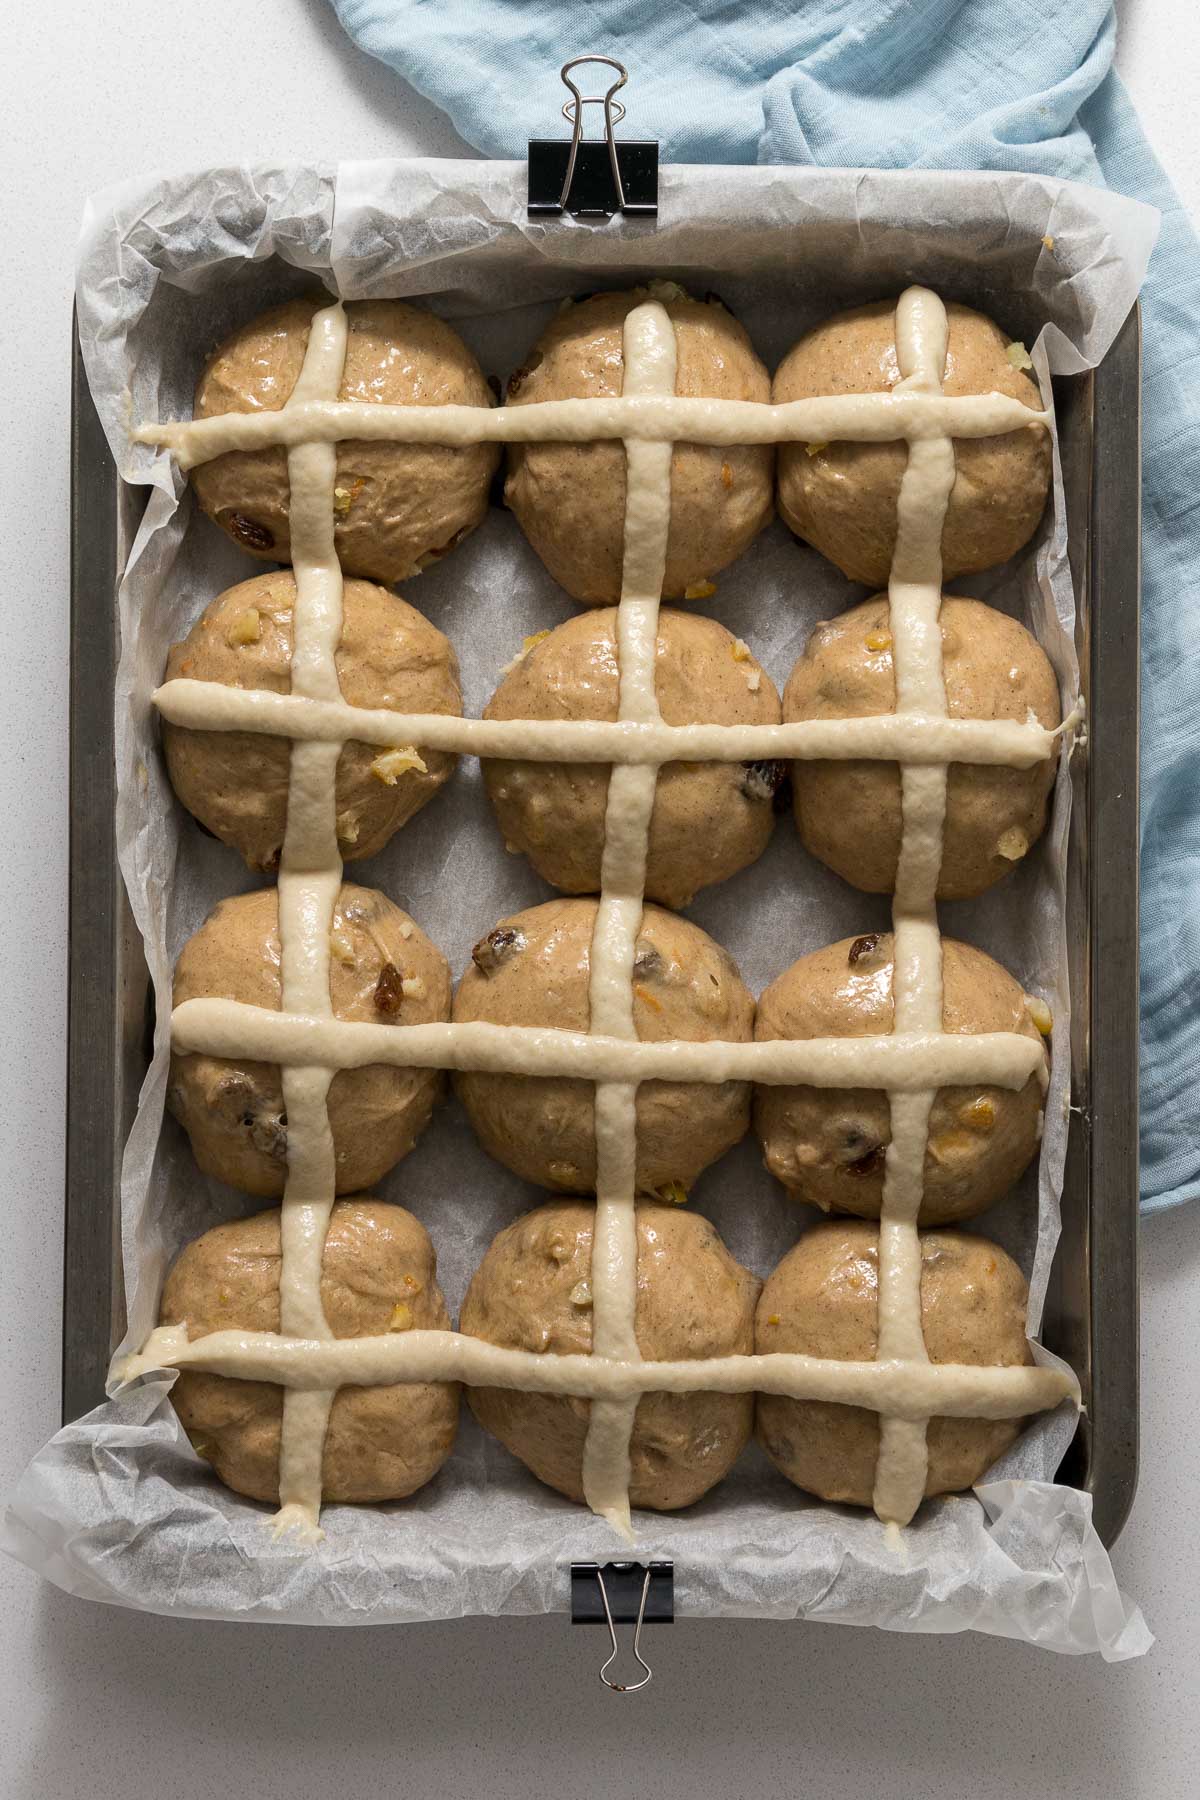 Hot cross bun dough with crosses ready for baking.